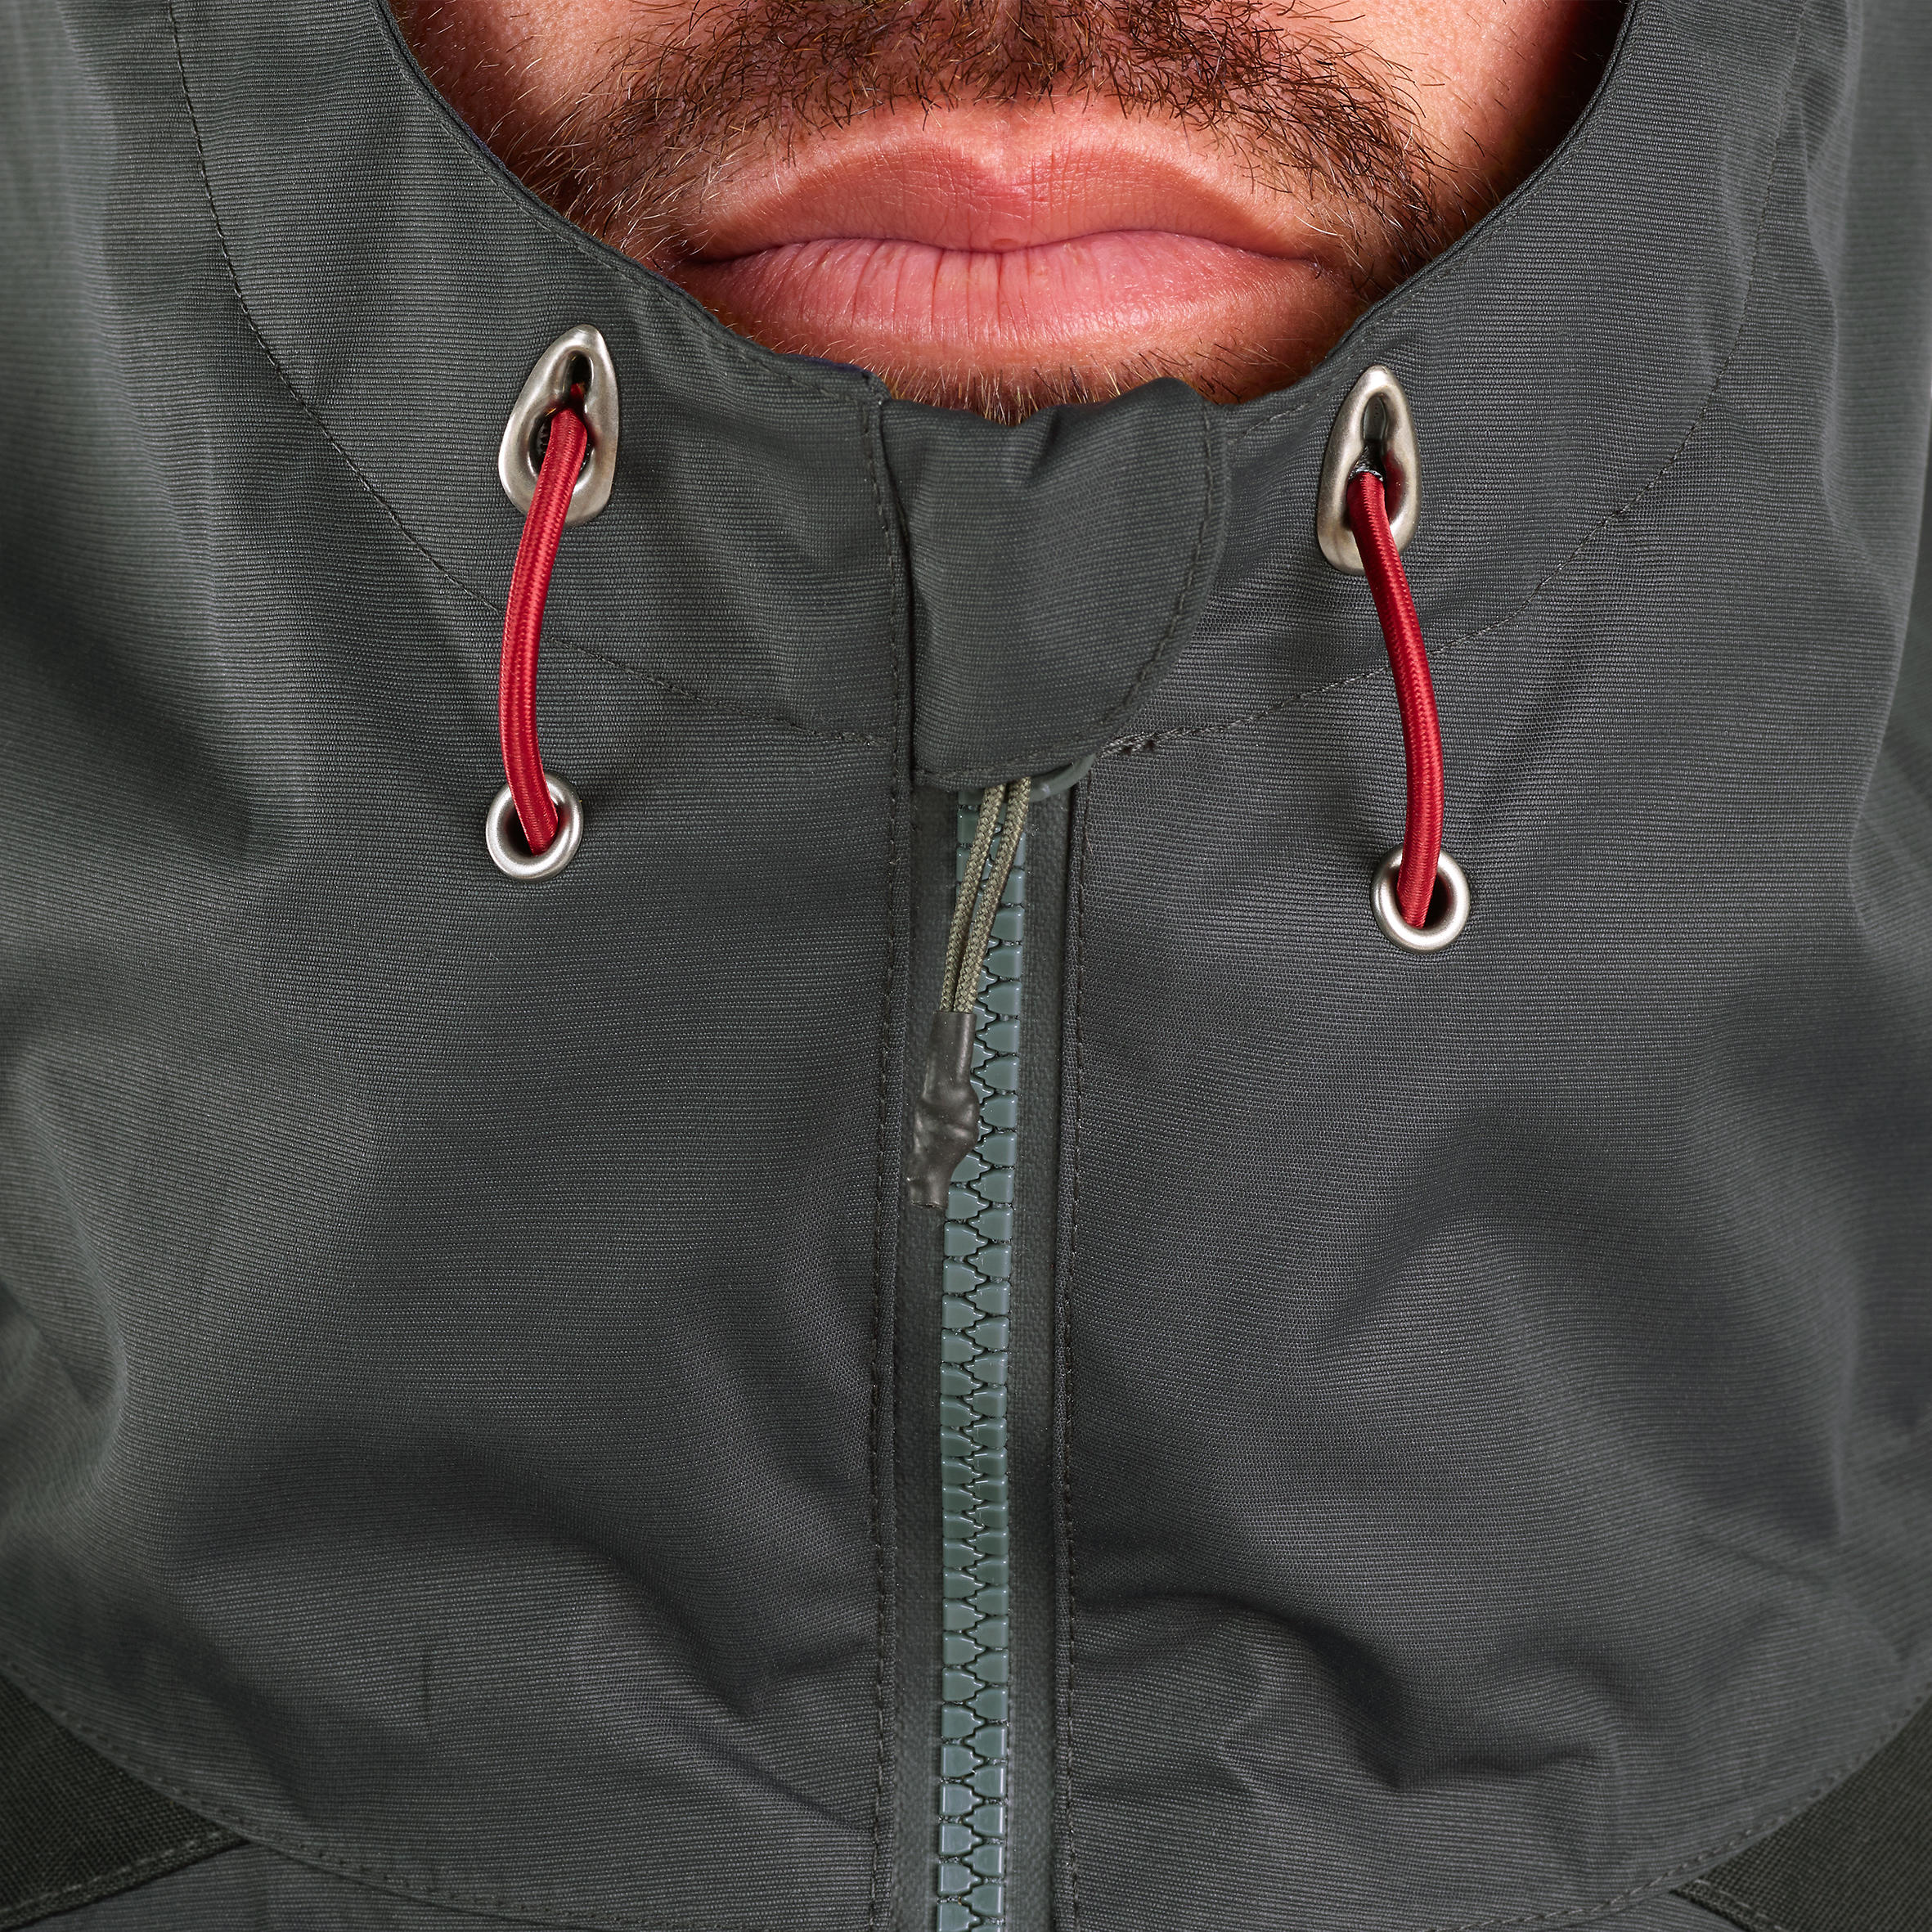 Fishing rain jacket 500 - Adults - Khaki brown, Carbon grey - Caperlan -  Decathlon